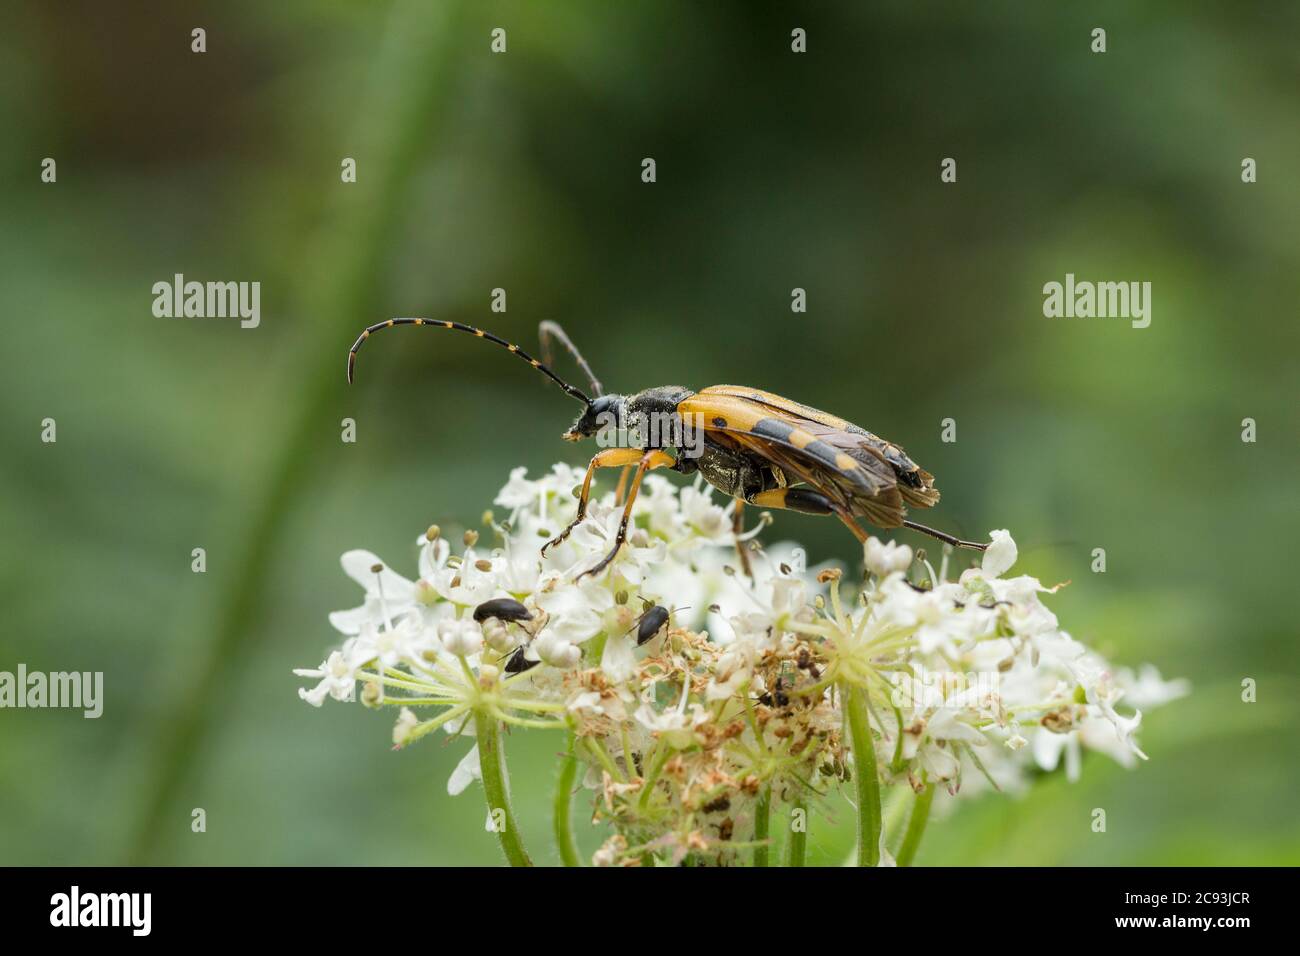 Longhorn beetle (Rutpela maculata) black and yellow woodland and hedgrow insect mimics wasp long black and yellow antennae black body yellow markings. Stock Photo